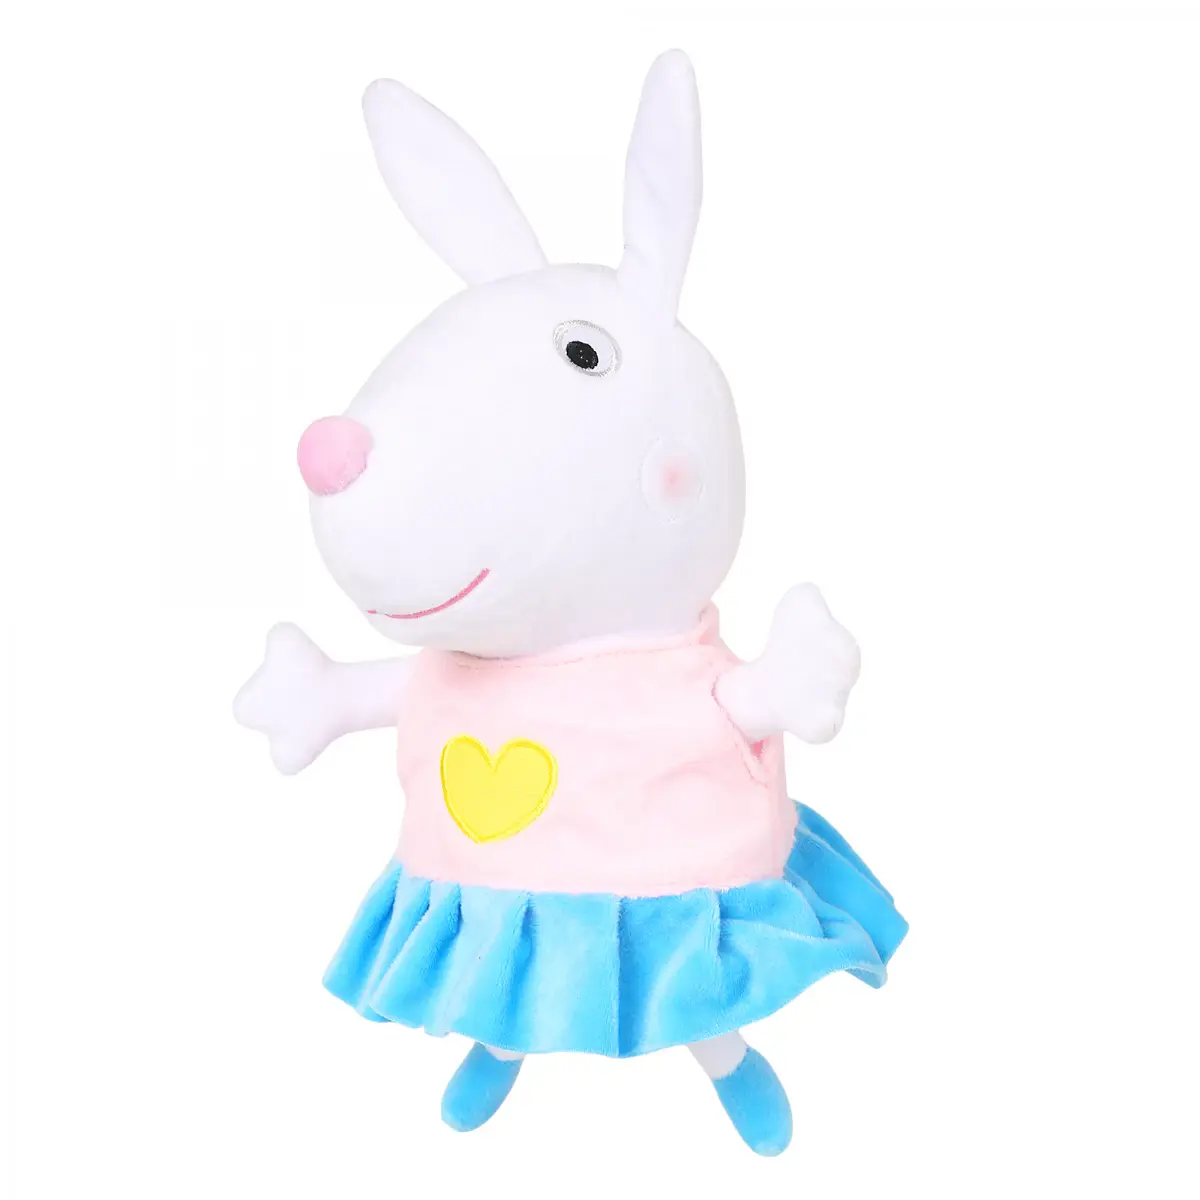 Peppa Pig Rebecca Rabbit Soft Toy for Kids, 30cm, 18M+, Multicolour